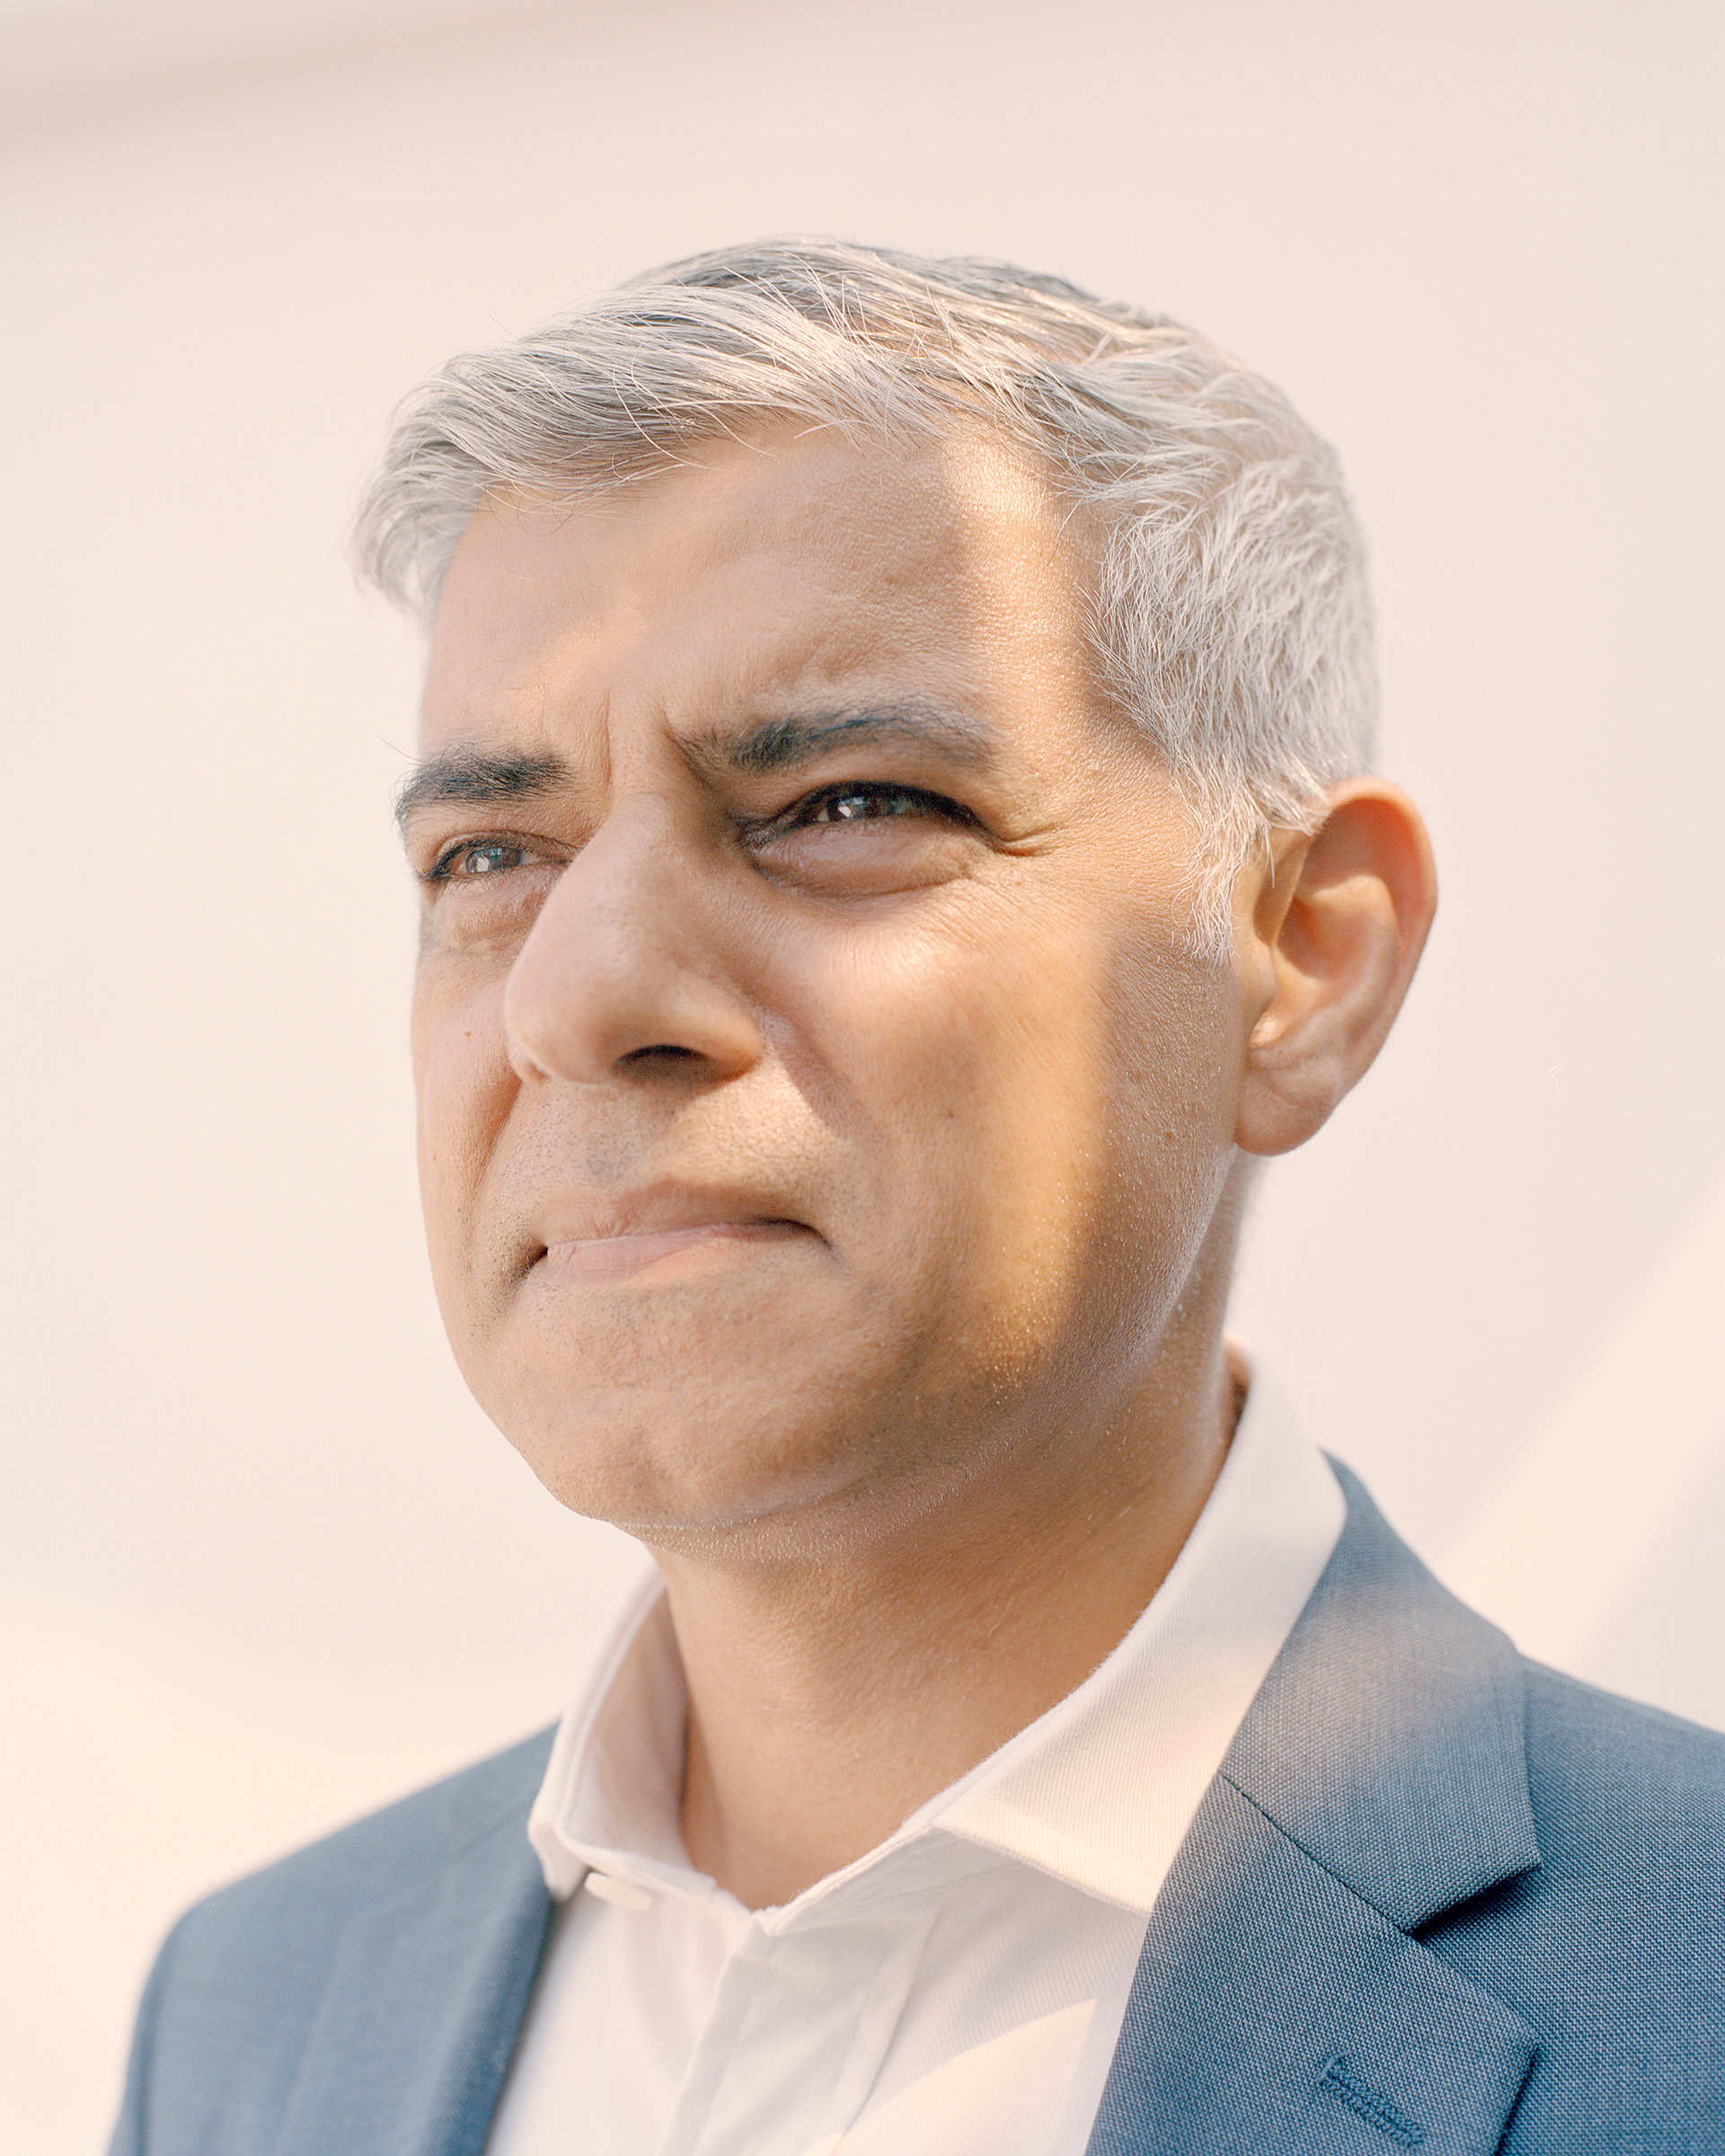 London Mayor Sadiq Khan, photographed at London's City Hall on July 21, 2021.